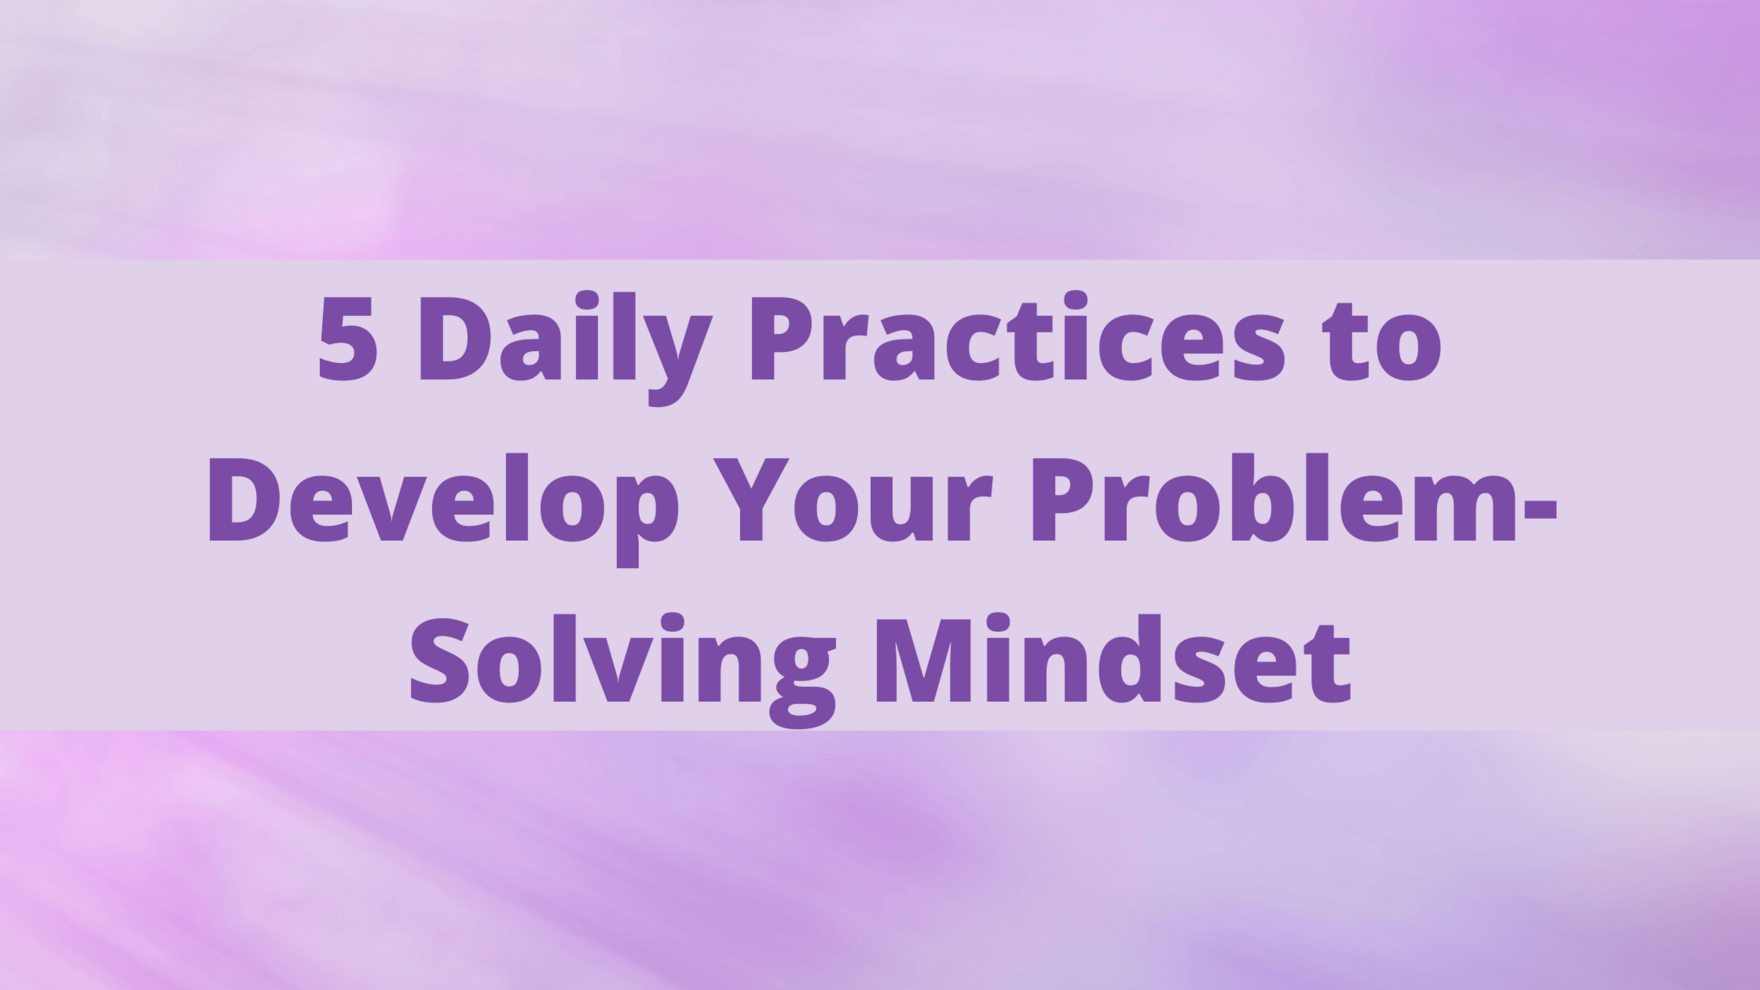 Business Mindset Blog - 5 Daily Practices to Develop Your Problem-Solving Mindset